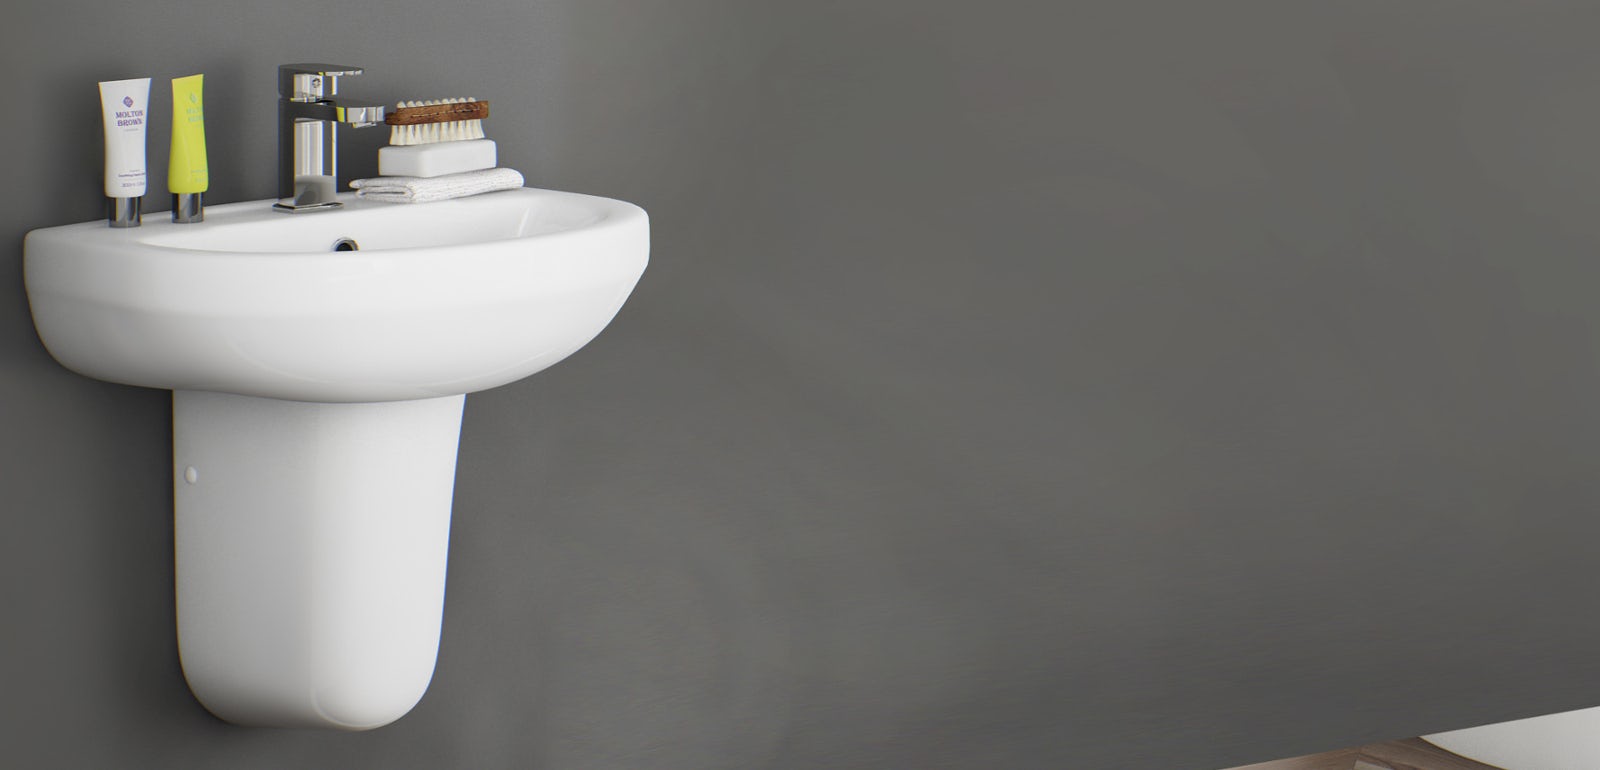 Bathroom wash basins & sinks buying guide | VictoriaPlum.com